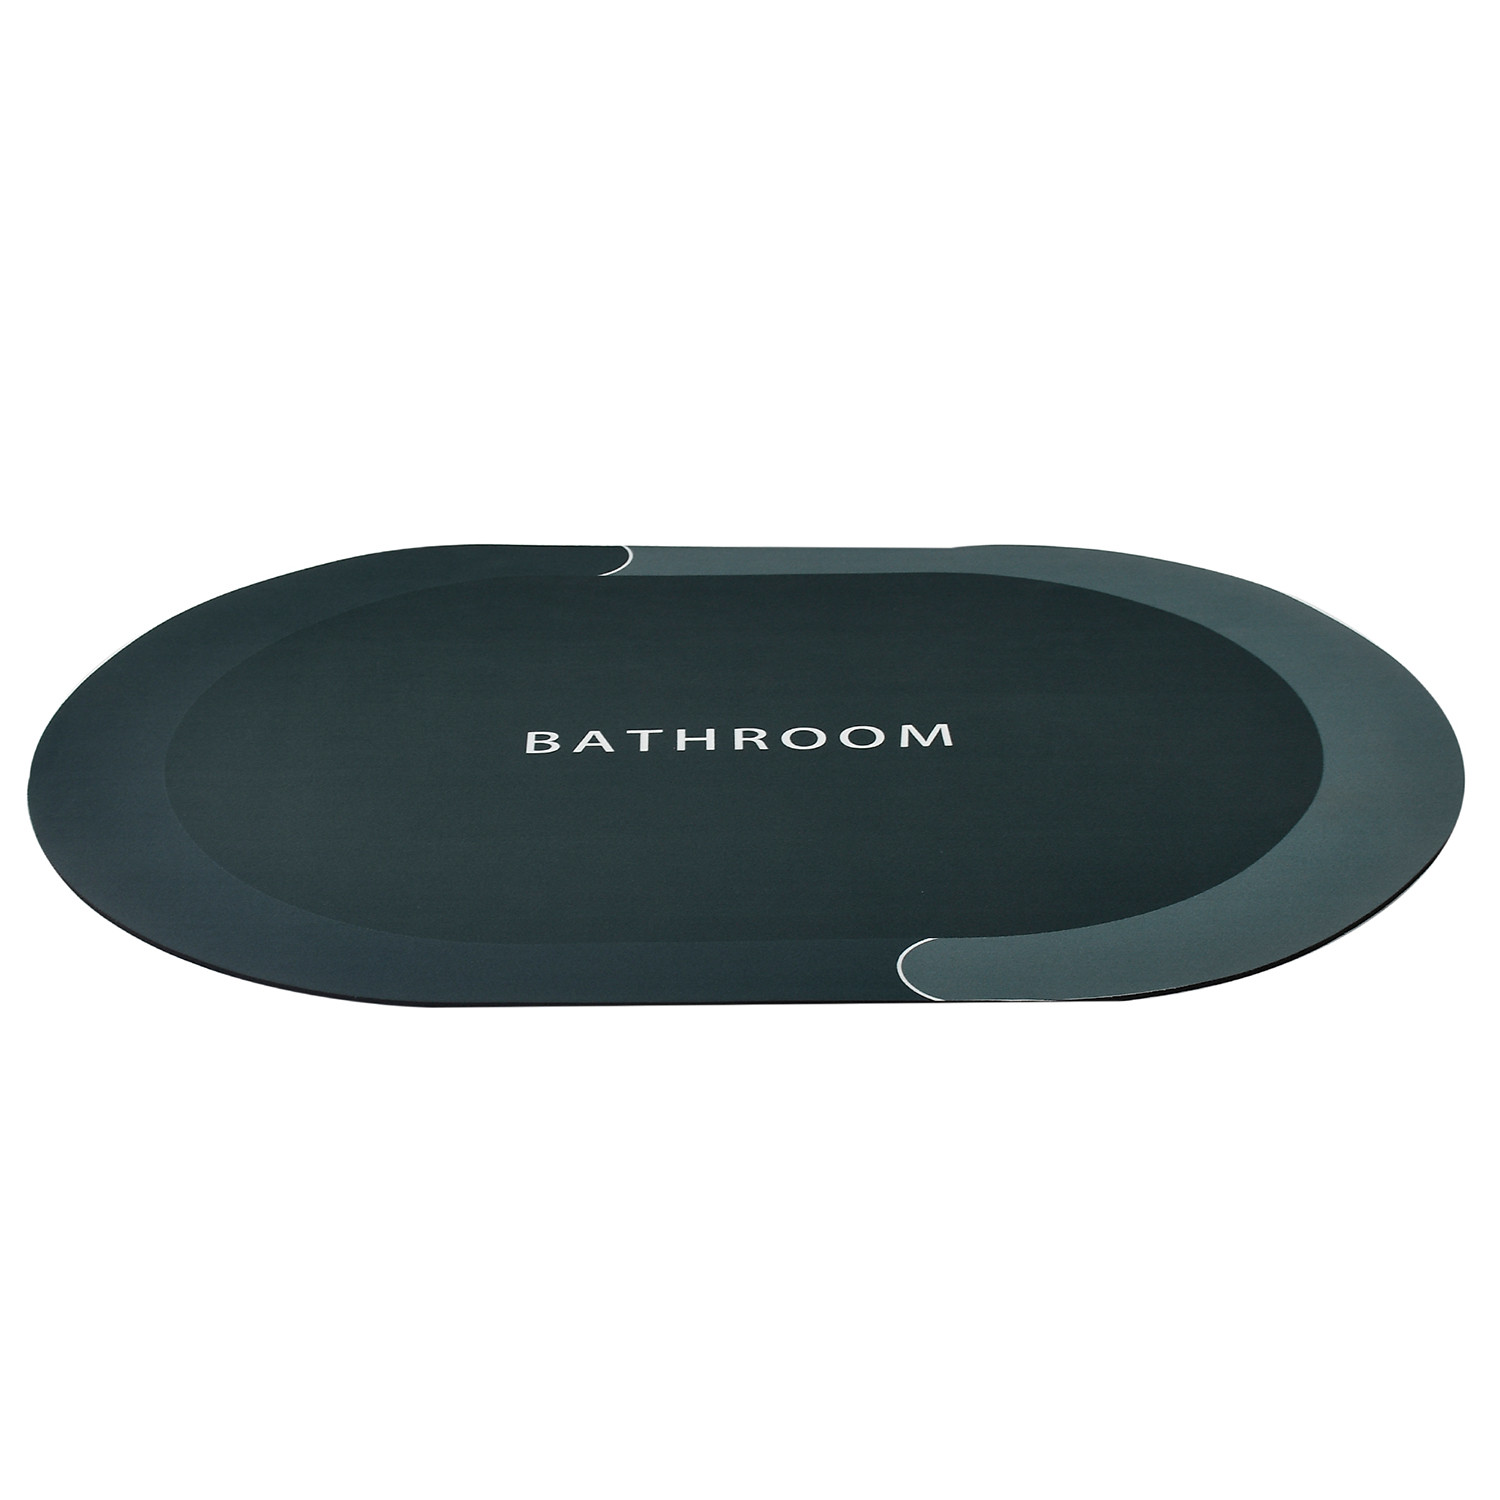 Kuber Industries Bathroom mat|Bathroom mat Super Absorbent Floor mat|Anti-skid Bathroom mat|Memory Foam Bathroom Rug Mat|Pack of 2 (Brown & Green)